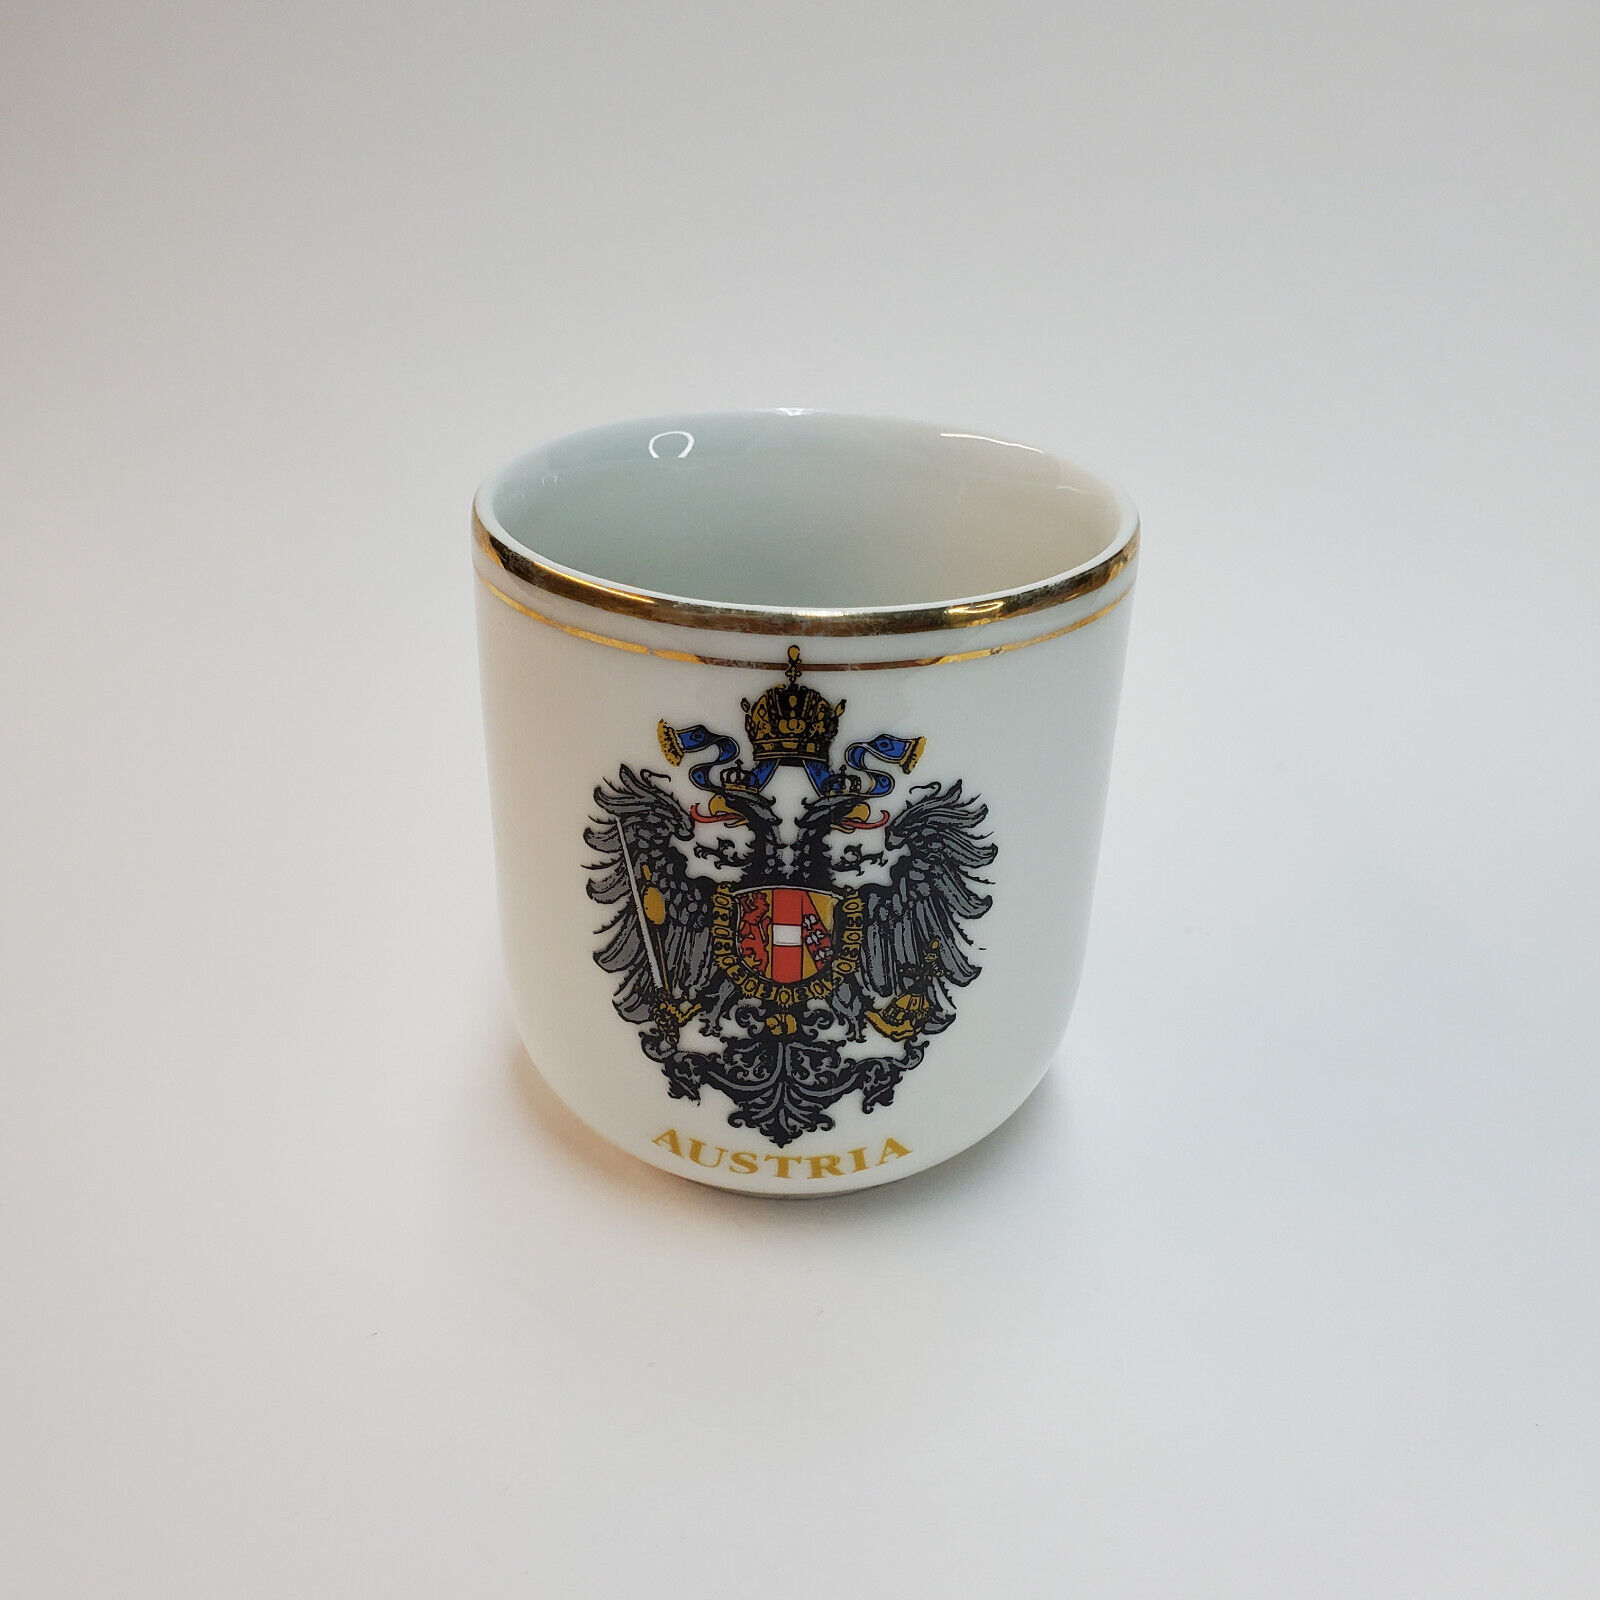 Austria Crest Coffee Mug with Gold Trim - K M Austria